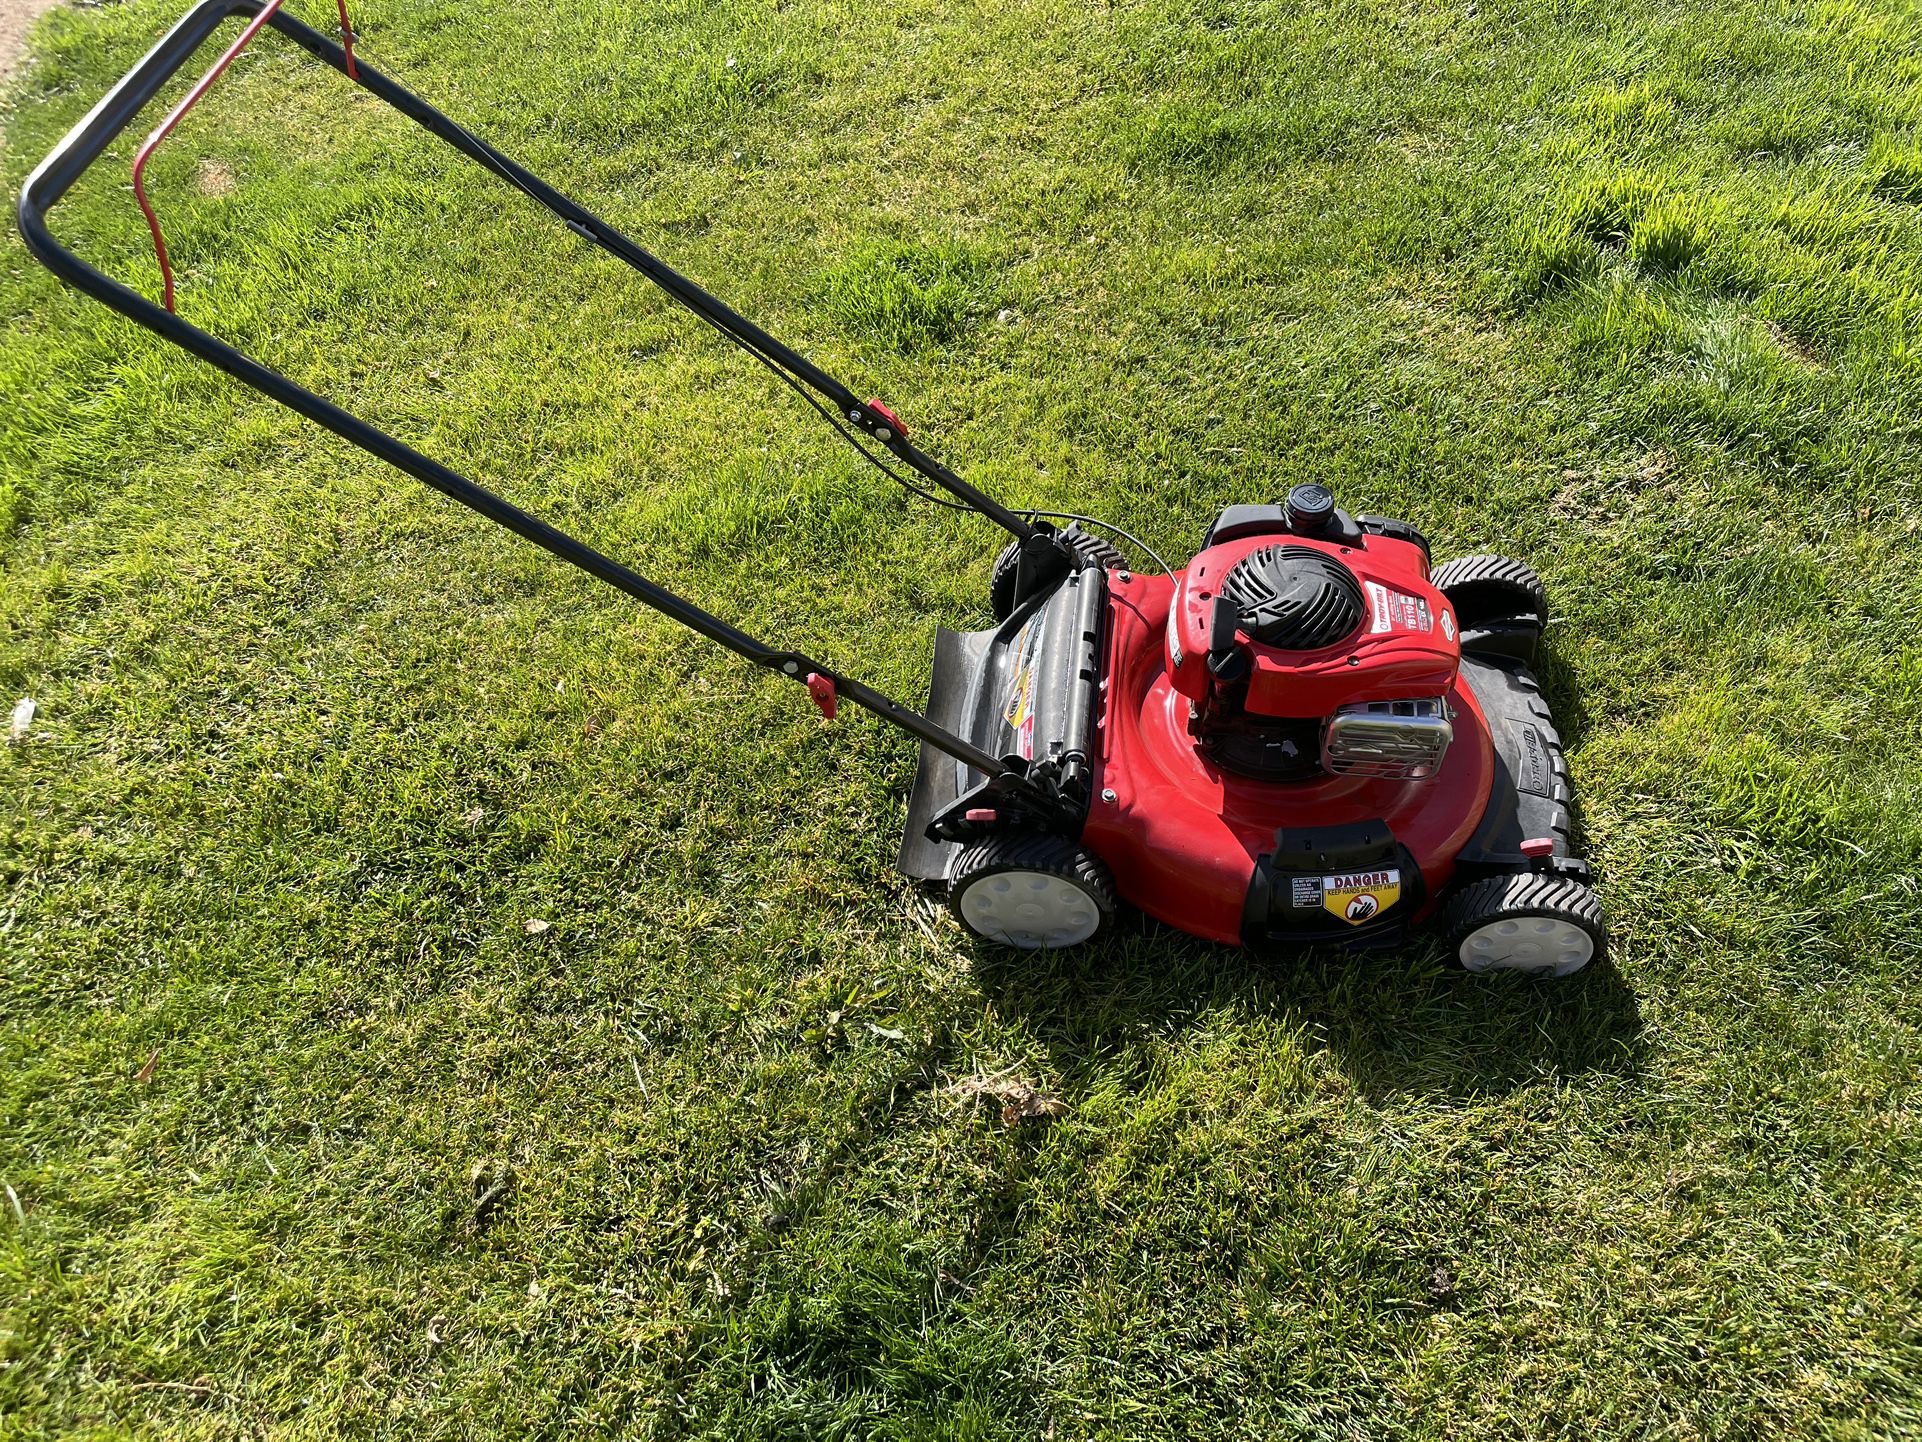 Troy-Bilt Push Lawn Mower 